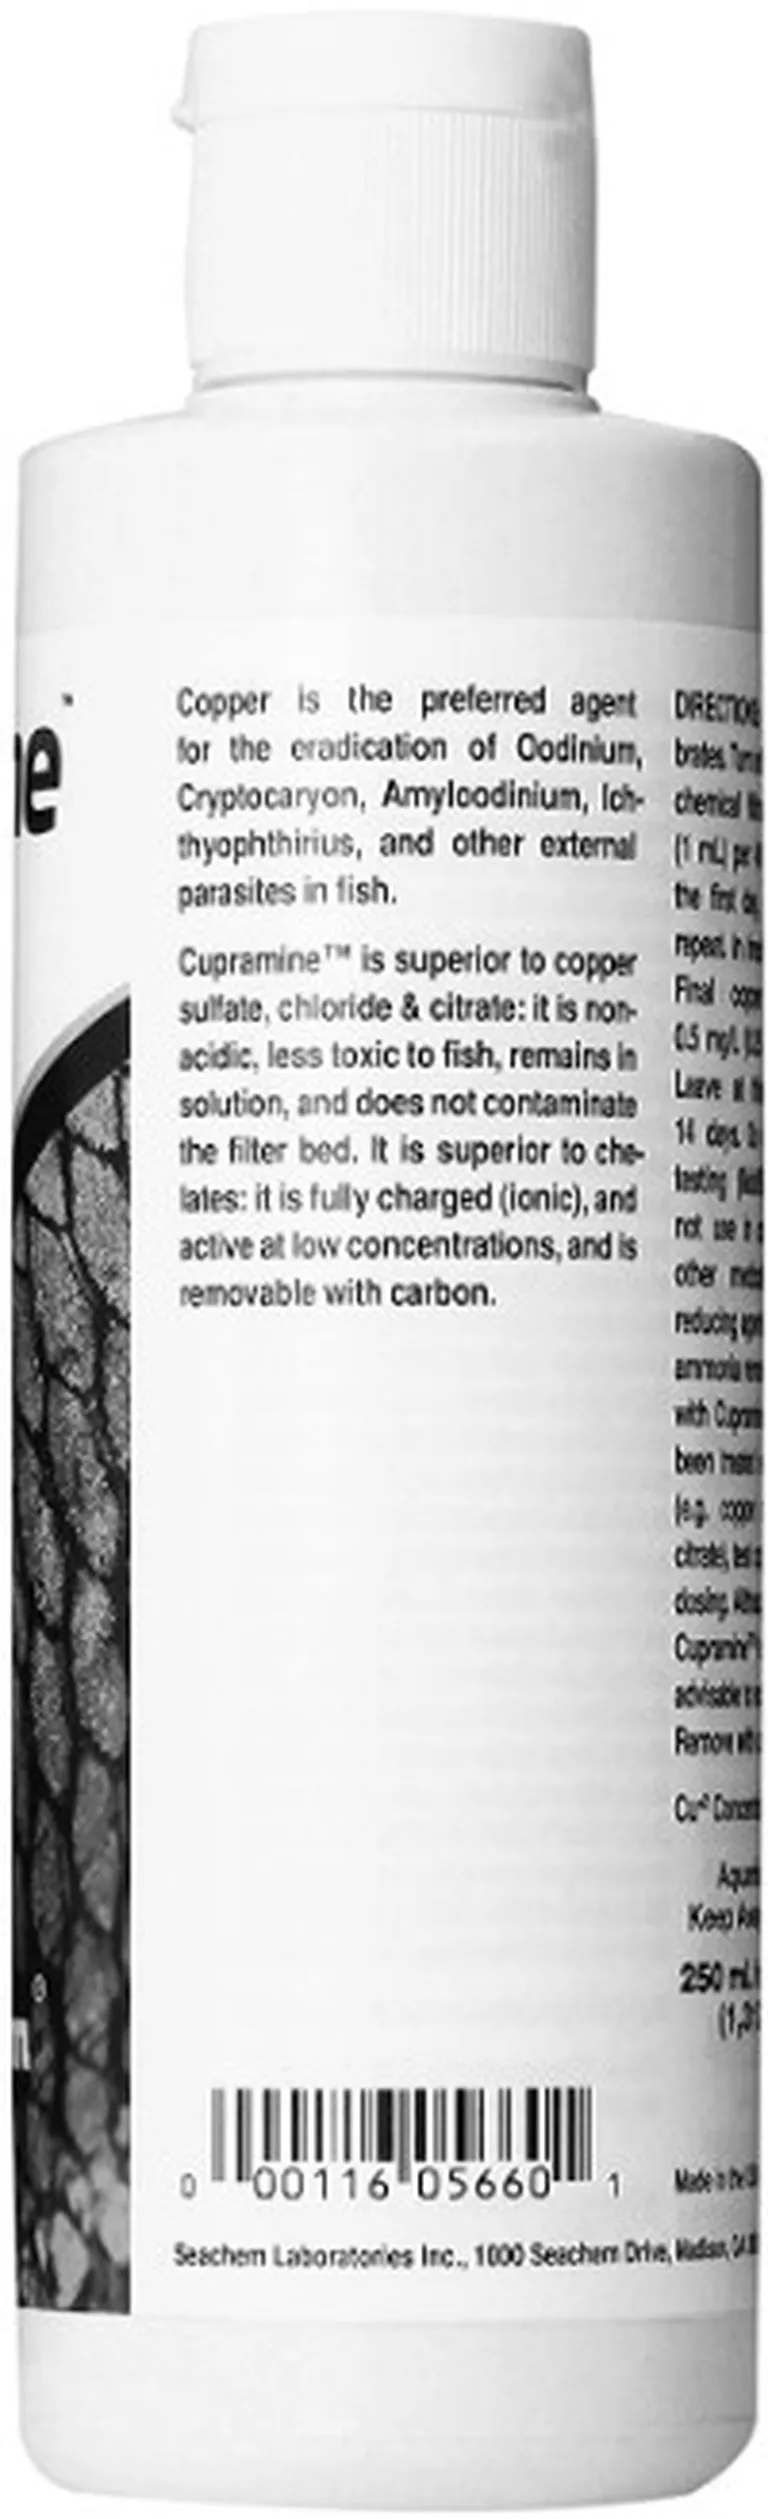 Seachem Cupramine Buffered Active Copper Effective Against External Parasites in Aquariums Photo 2